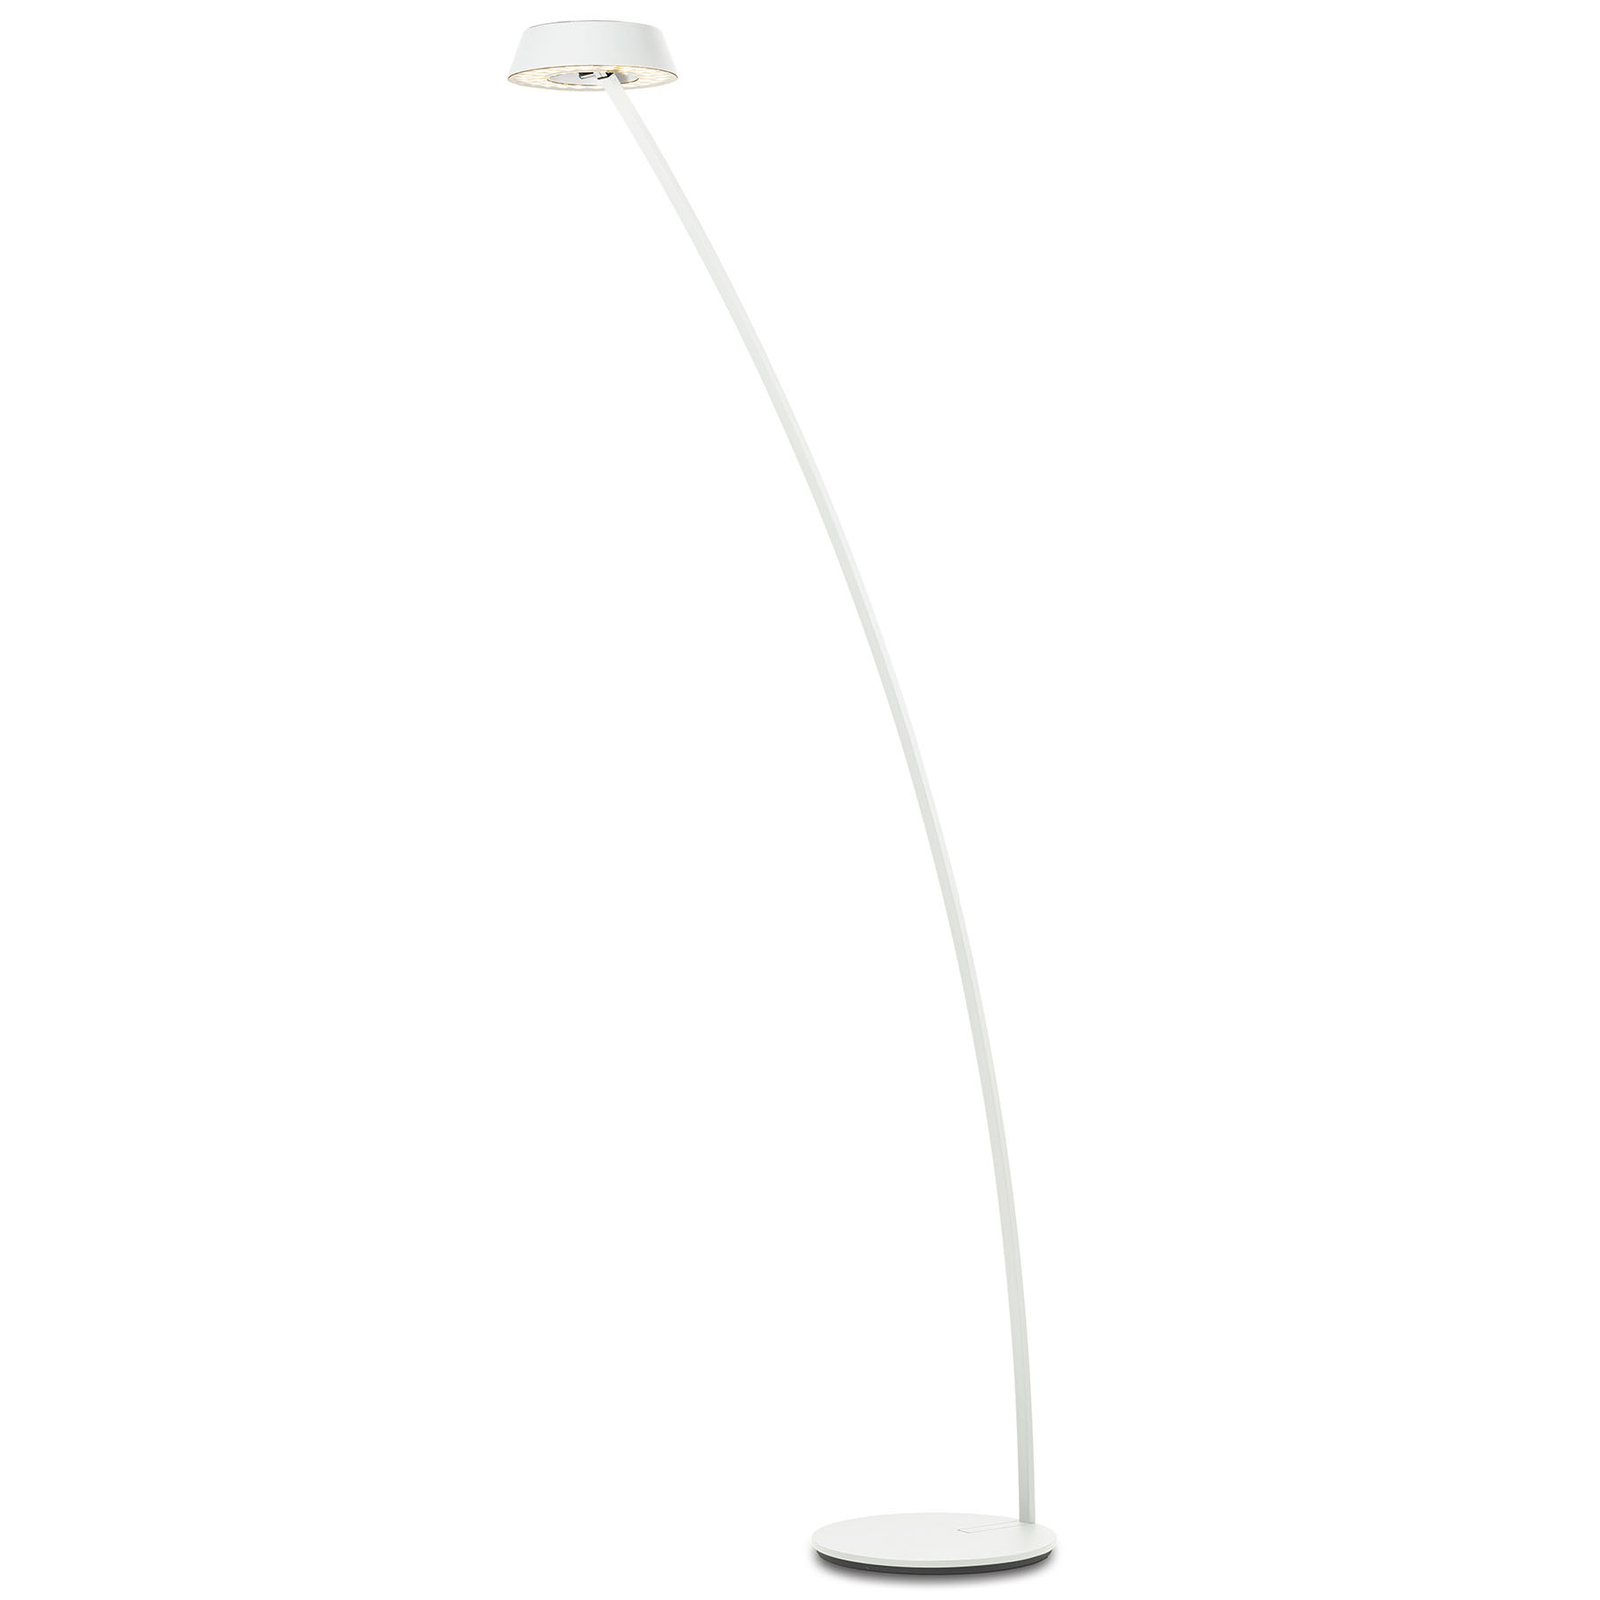 OLIGO Glance lampadaire LED arqué blanc mat